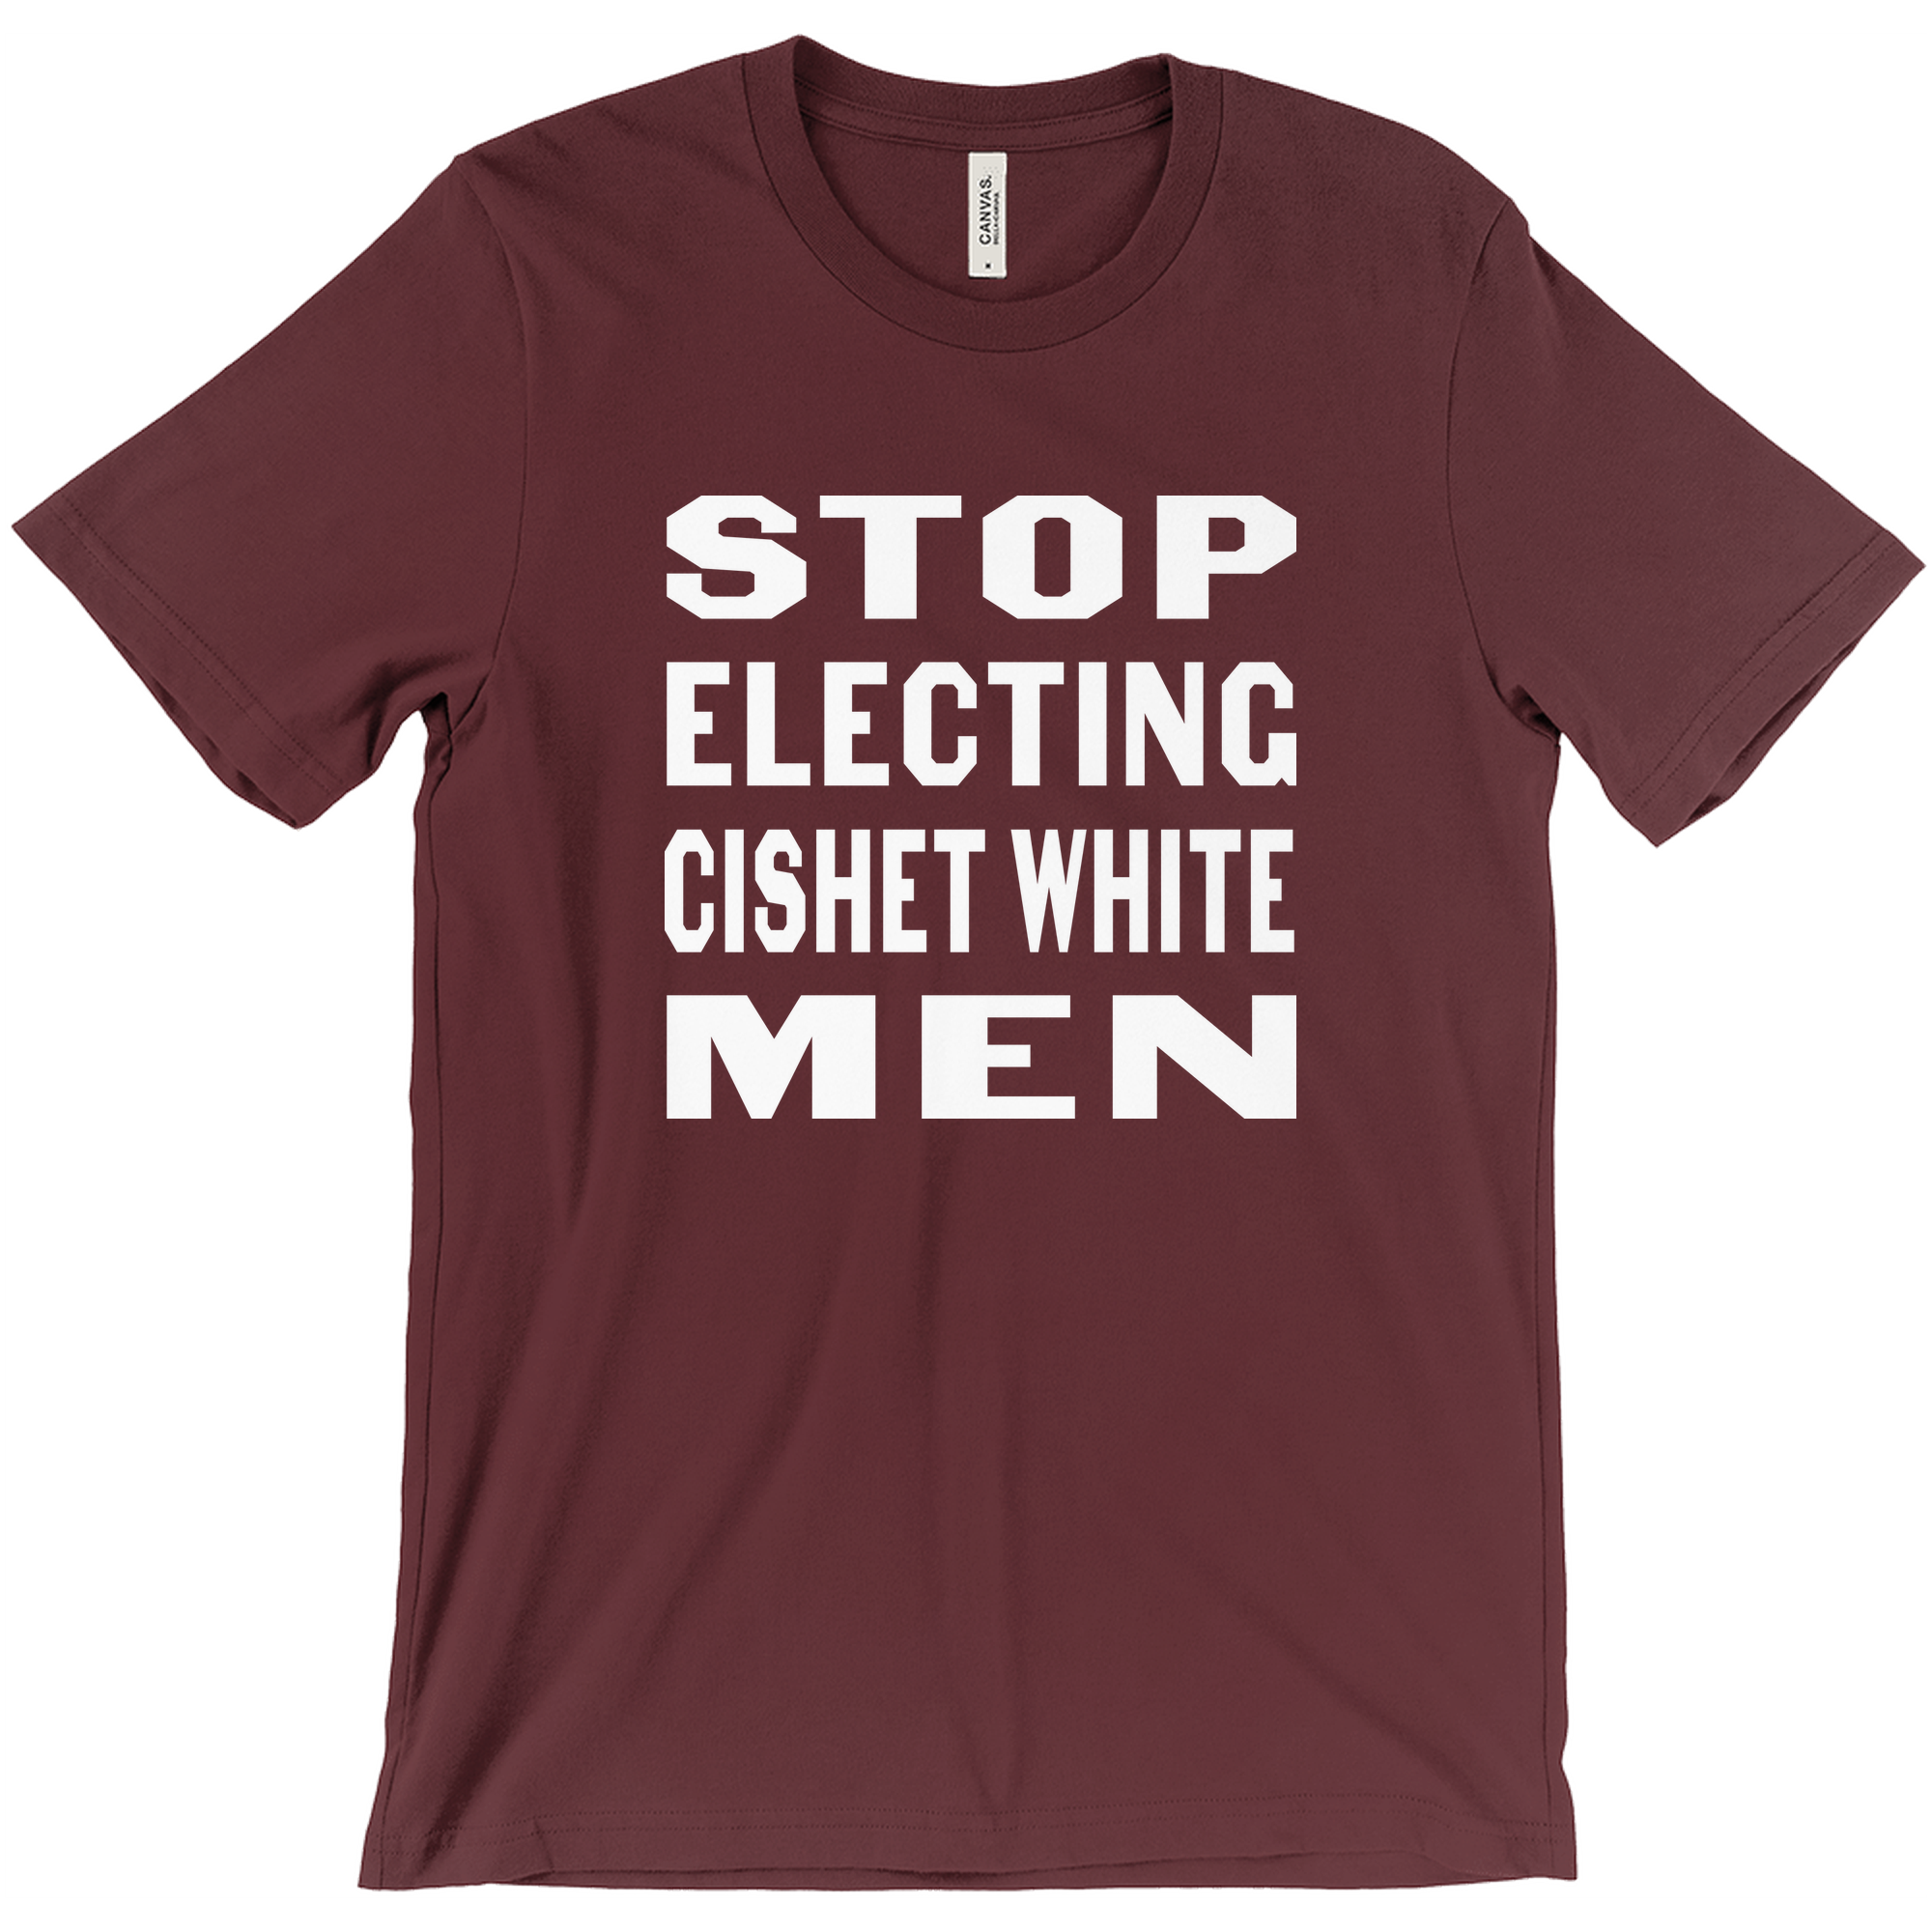 Stop Electing Men maroon T-shirt